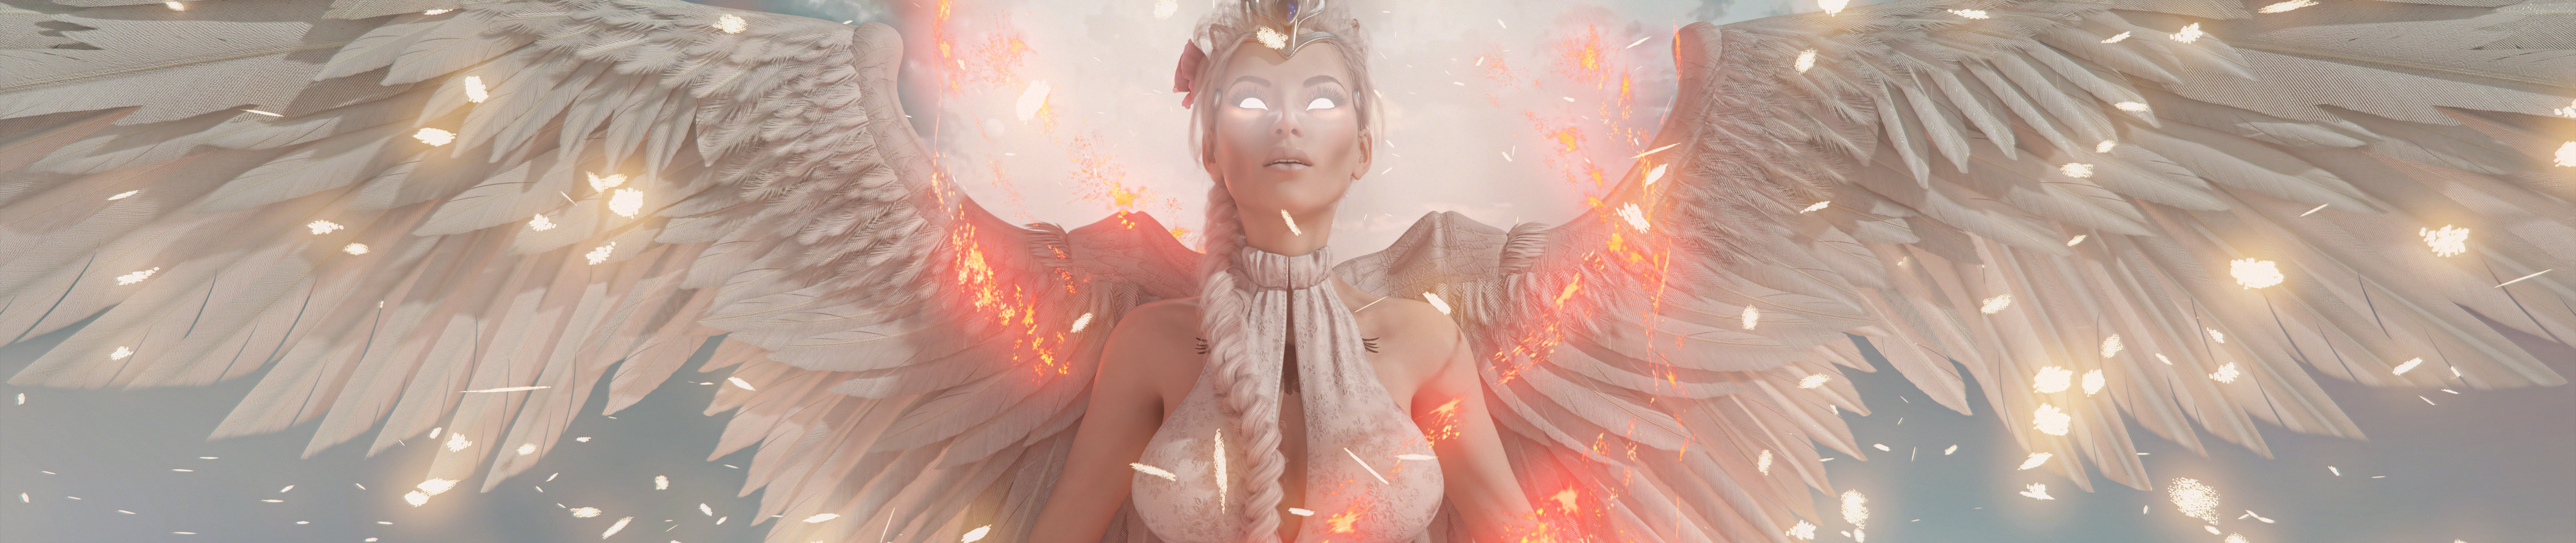 General 5120x1080 CGI adult games Shards of Her fantasy girl wings magic glowing eyes women braids digital art ultrawide